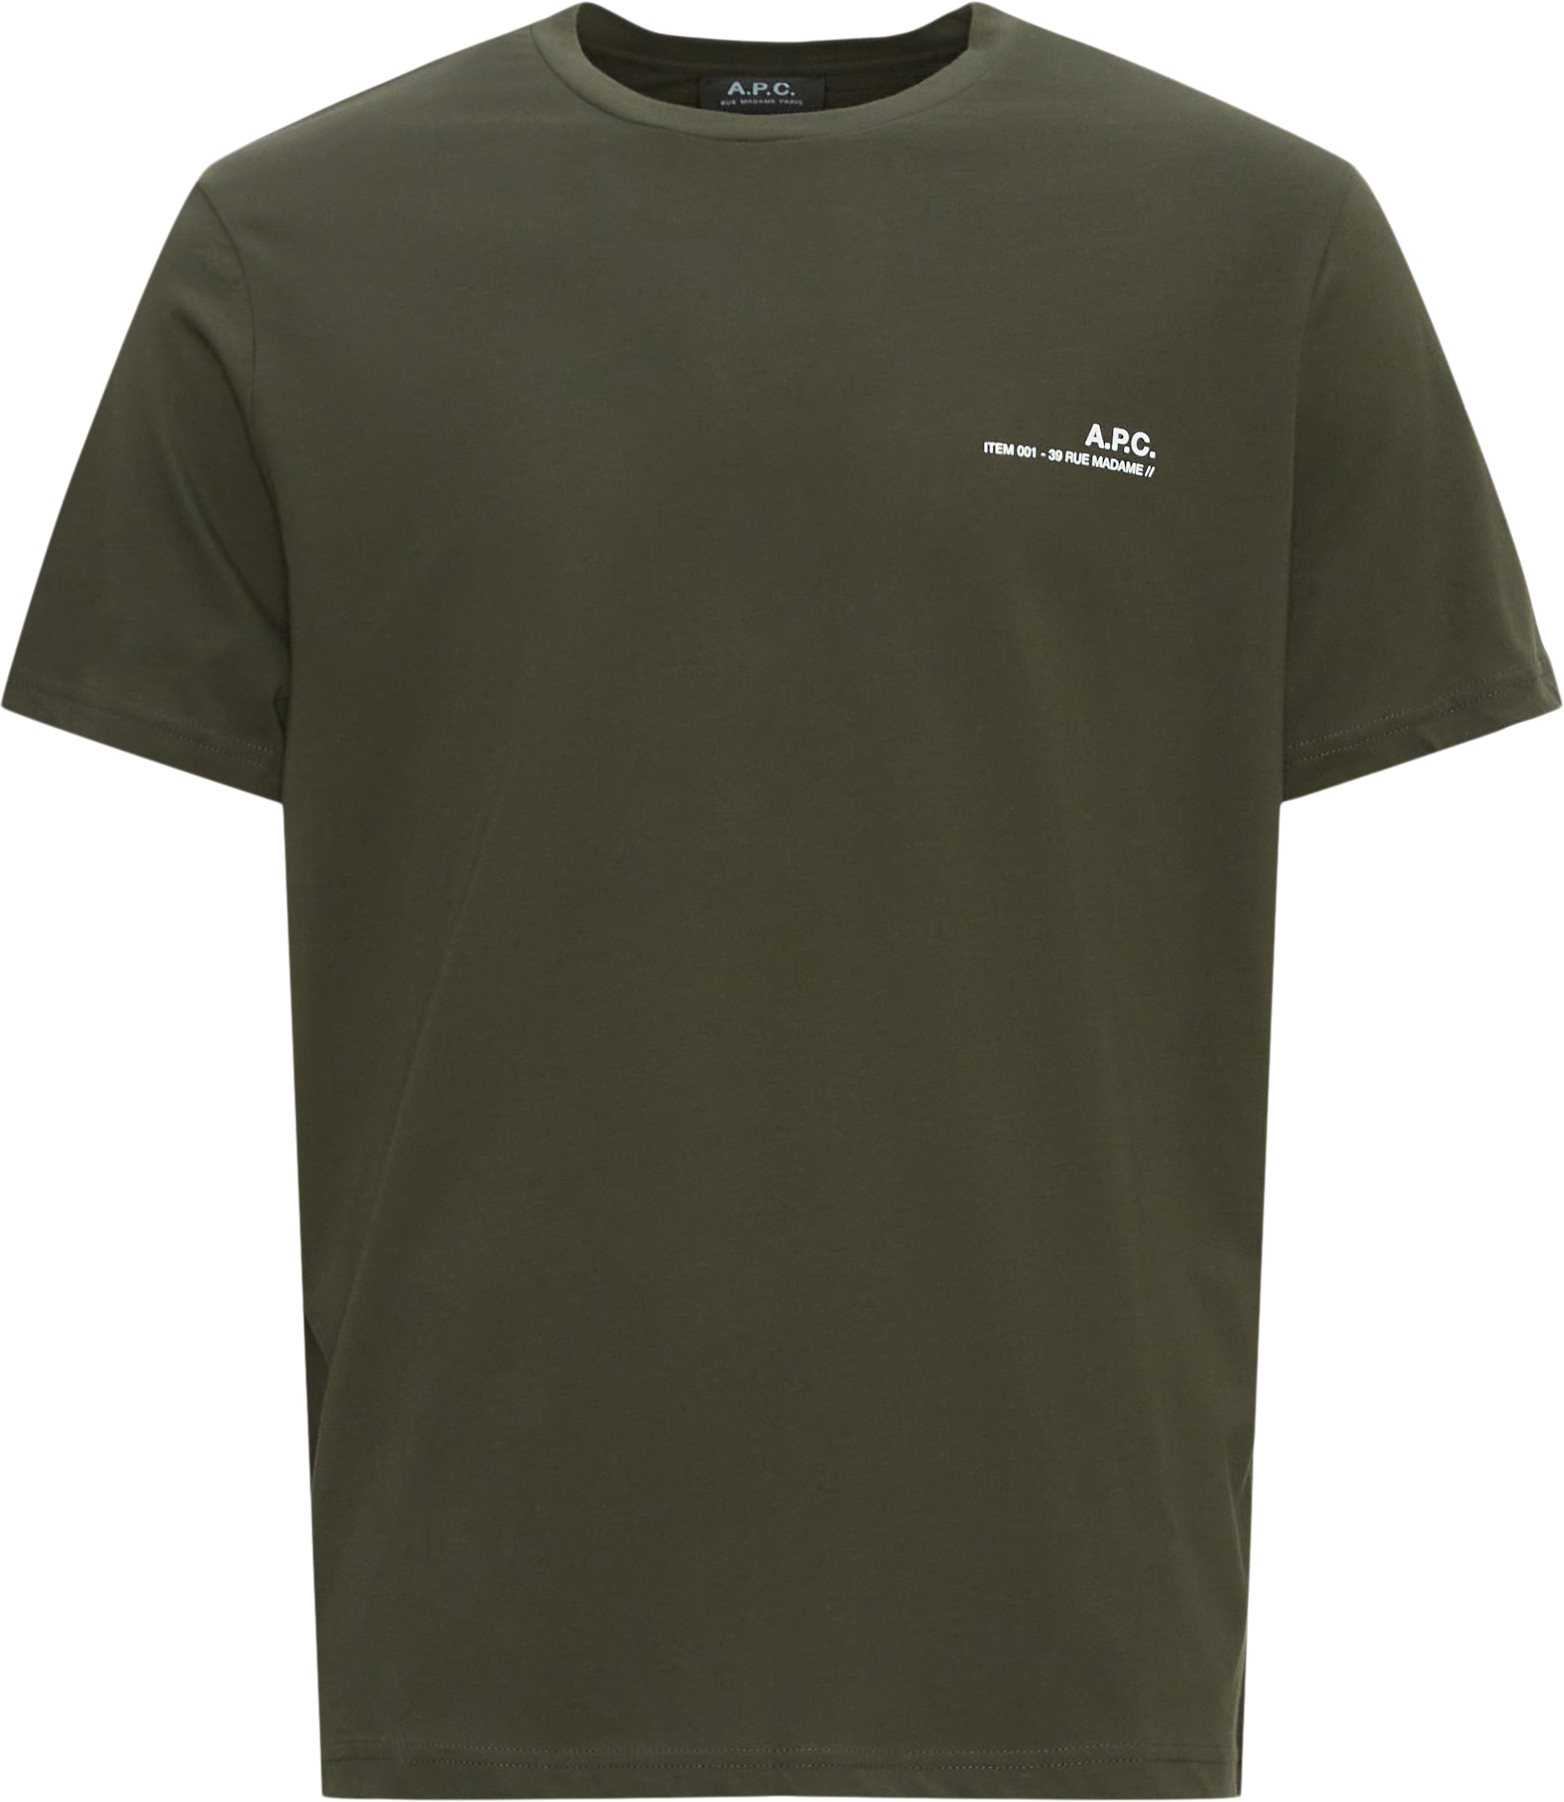 A.P.C. T-shirts COFBT H26904 ITEM Army